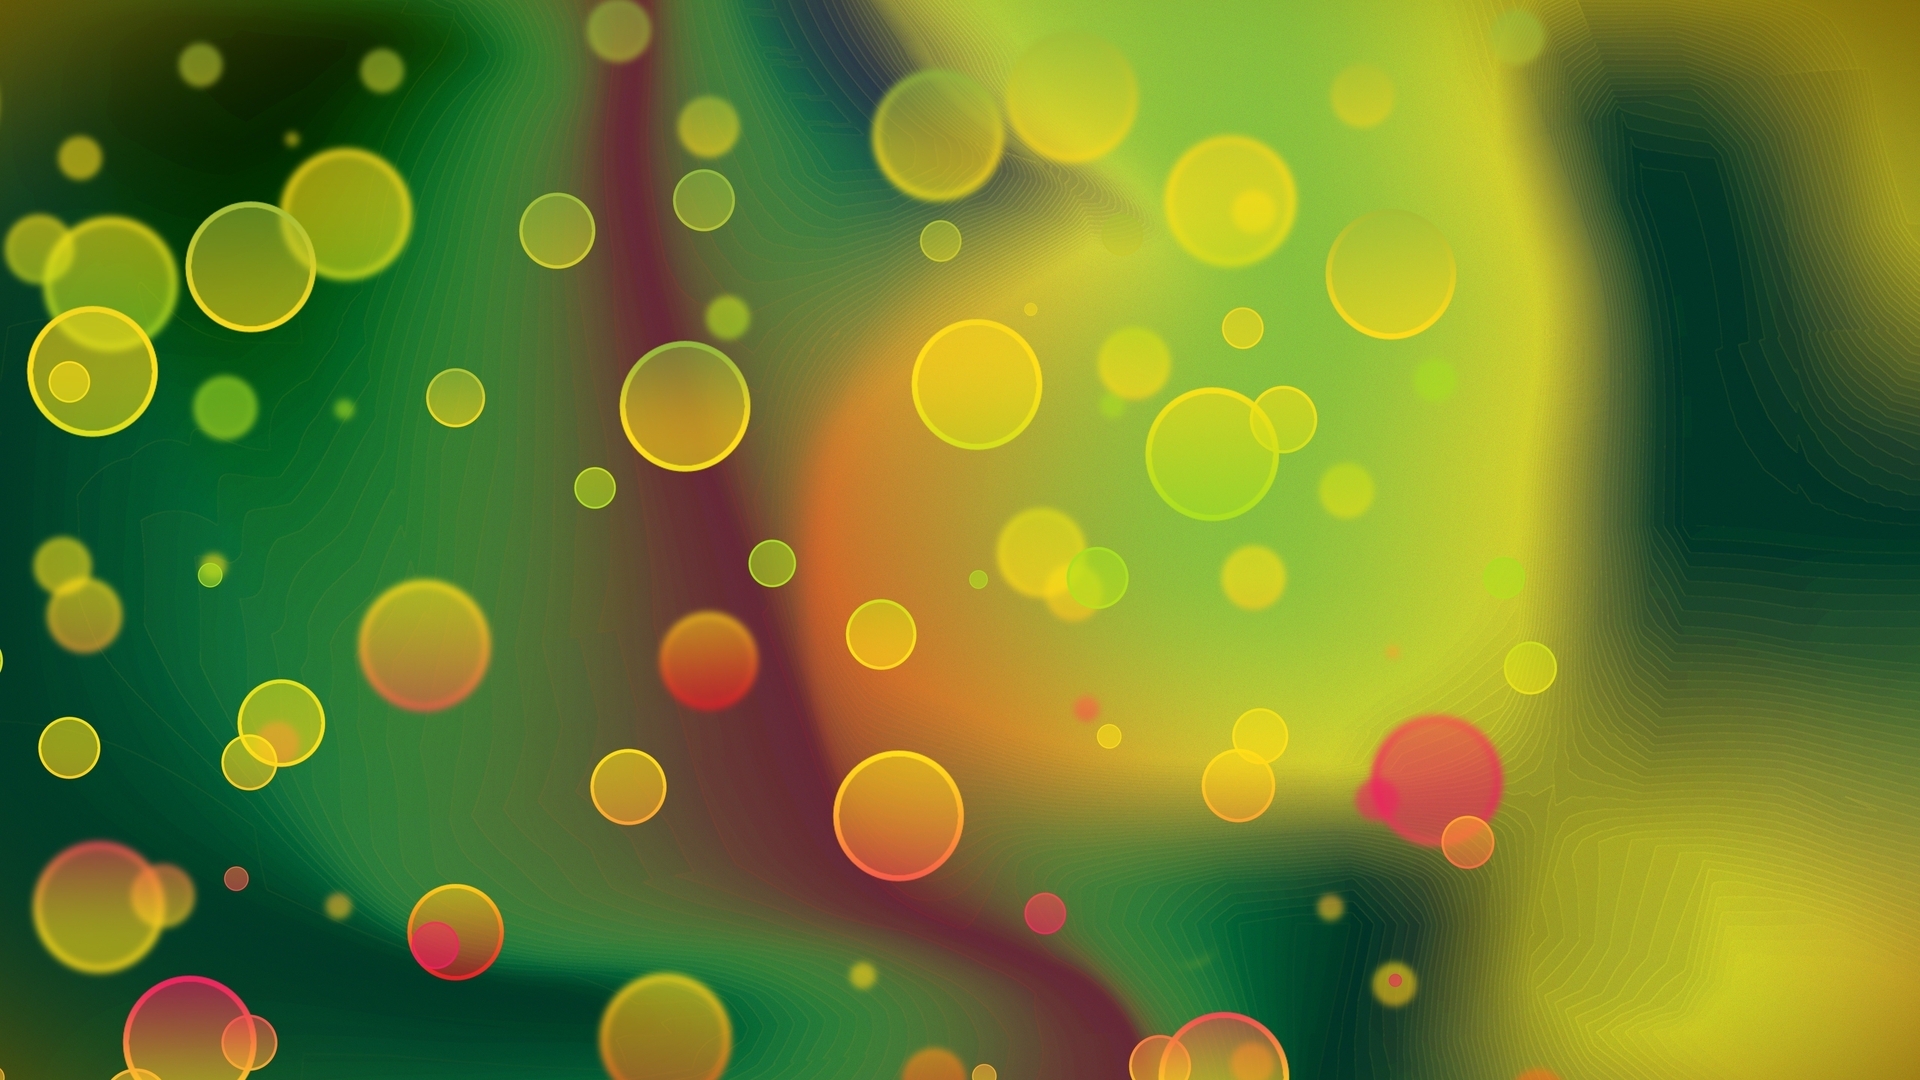 Image: Circles, highlights, blurring, green, yellow, ripples